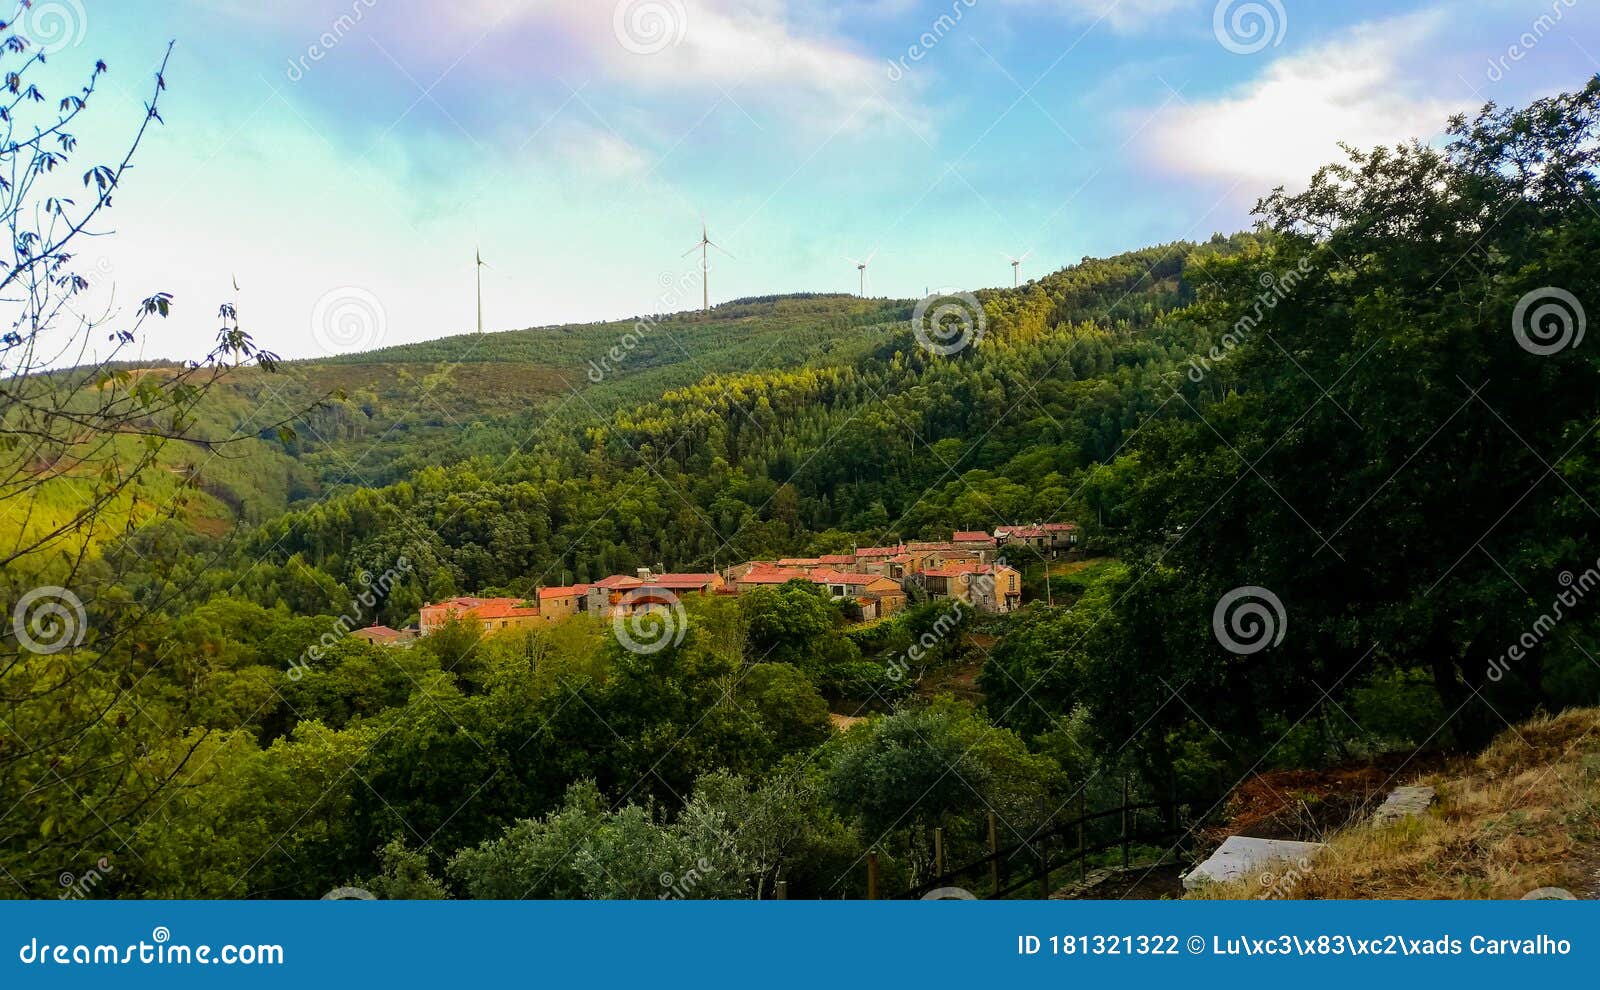 beautiful landscape of gondramaz in mirando do corvo